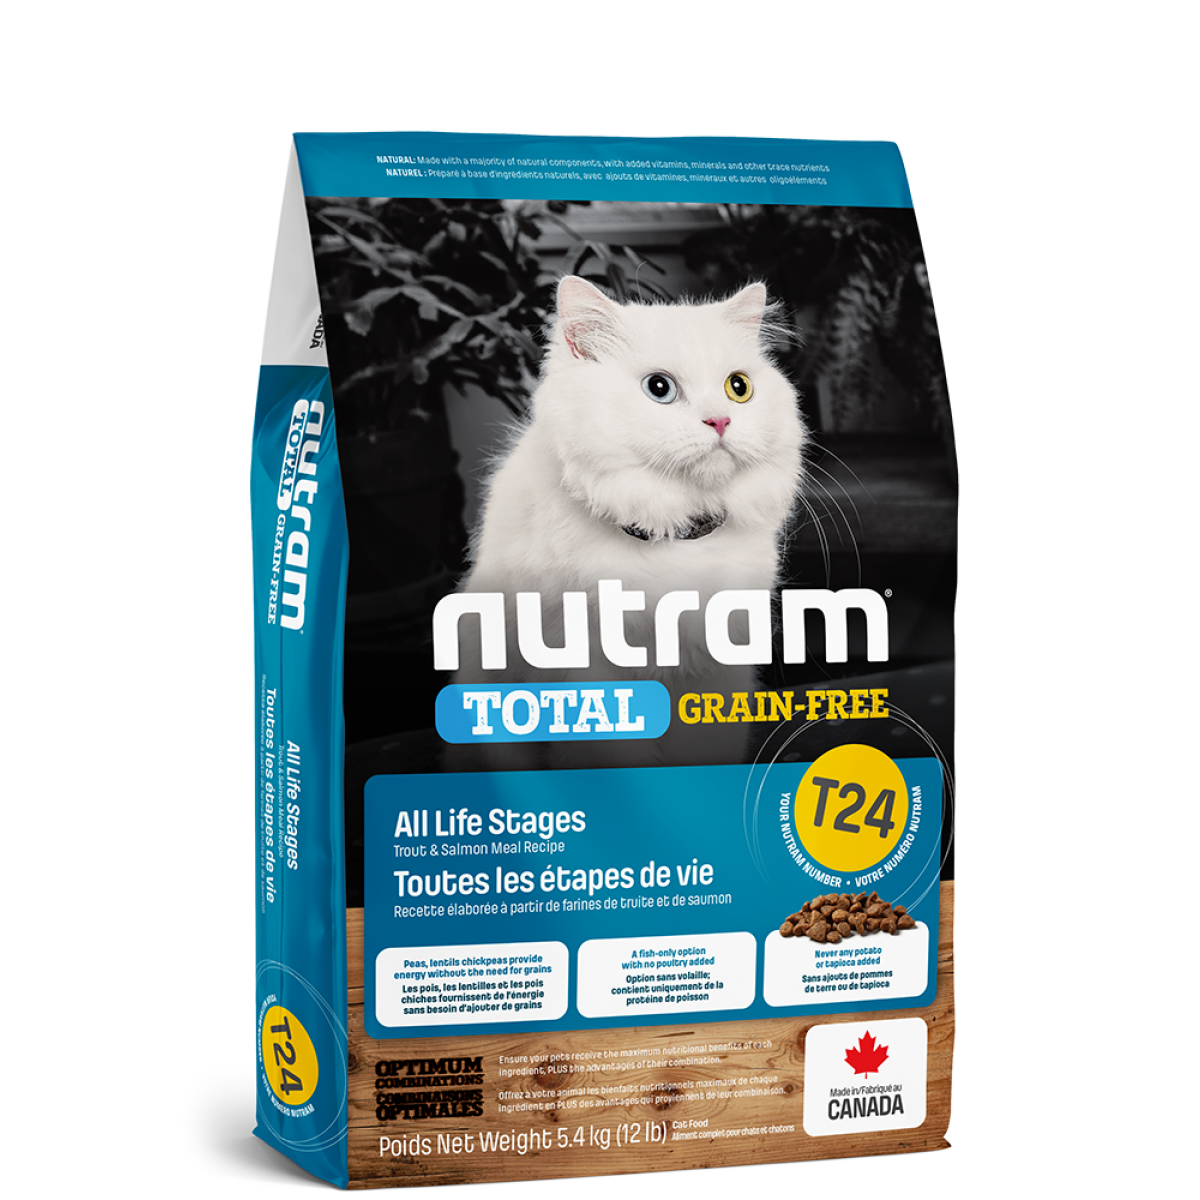 Nutram - Total Grain-Free - Salmon & Trout Recipe (Cats) T24130